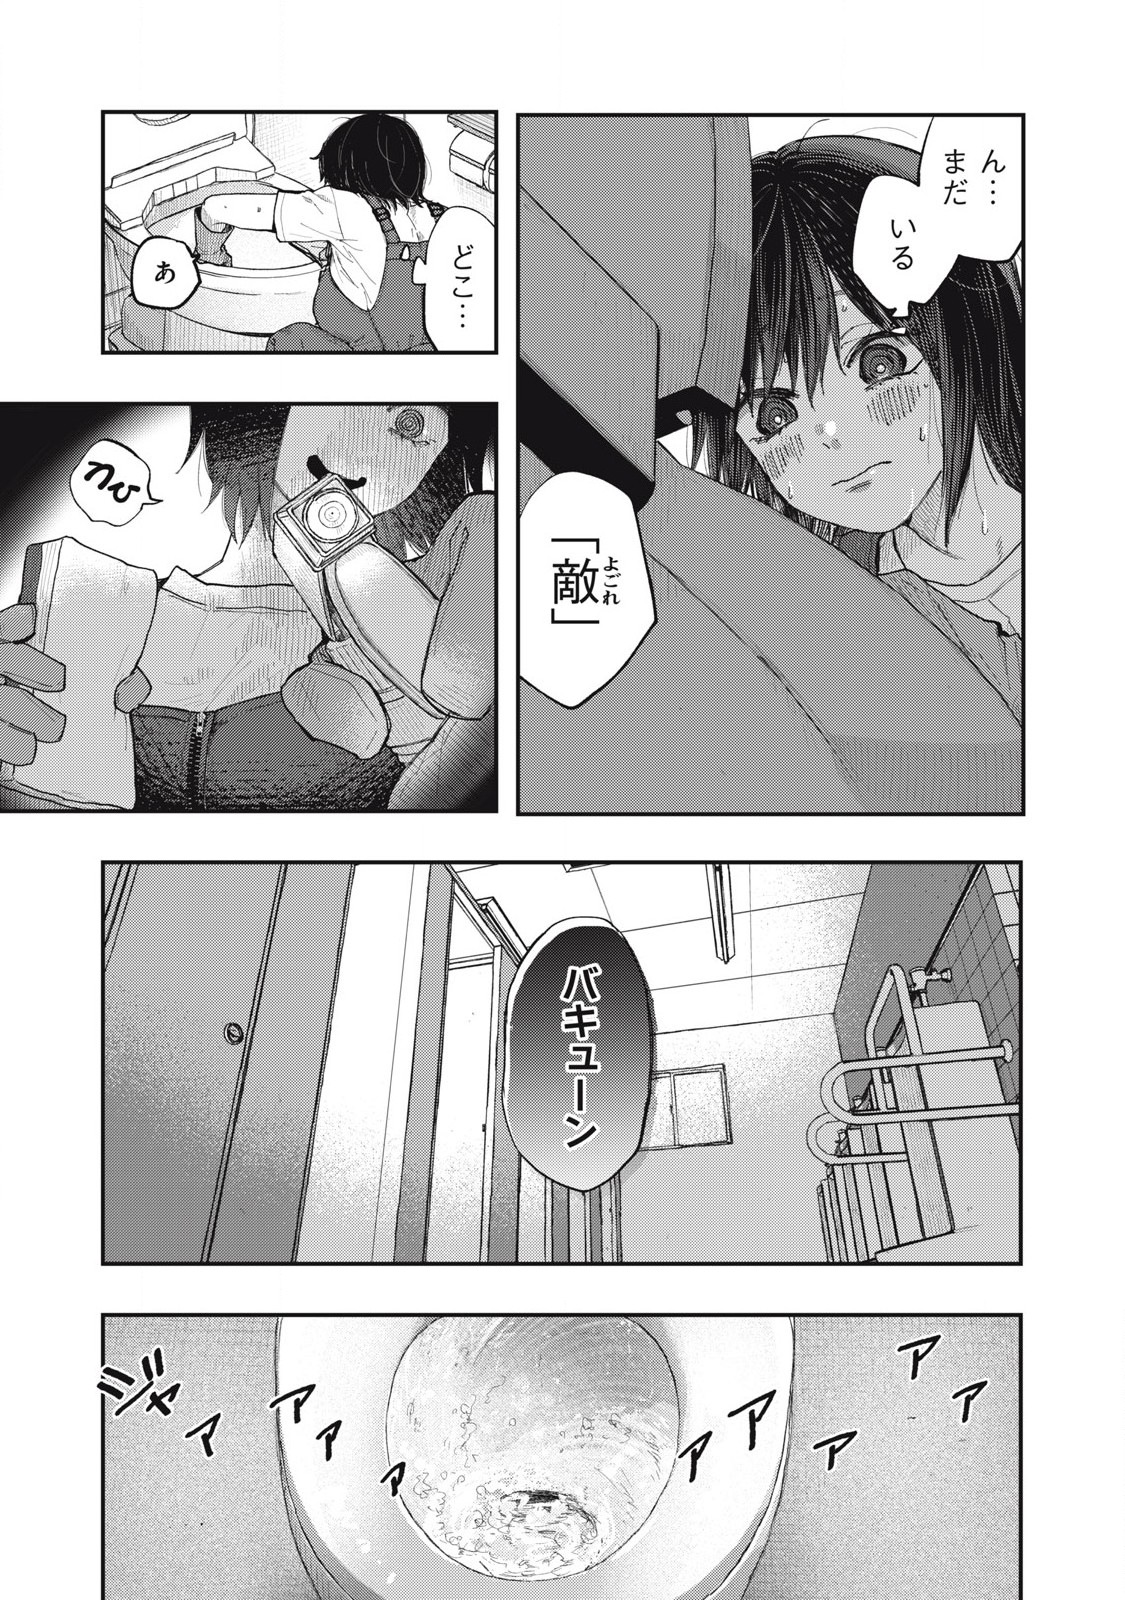 Seisouin Nono-chan Kyou no Tsubuyaki - Chapter 1 - Page 3